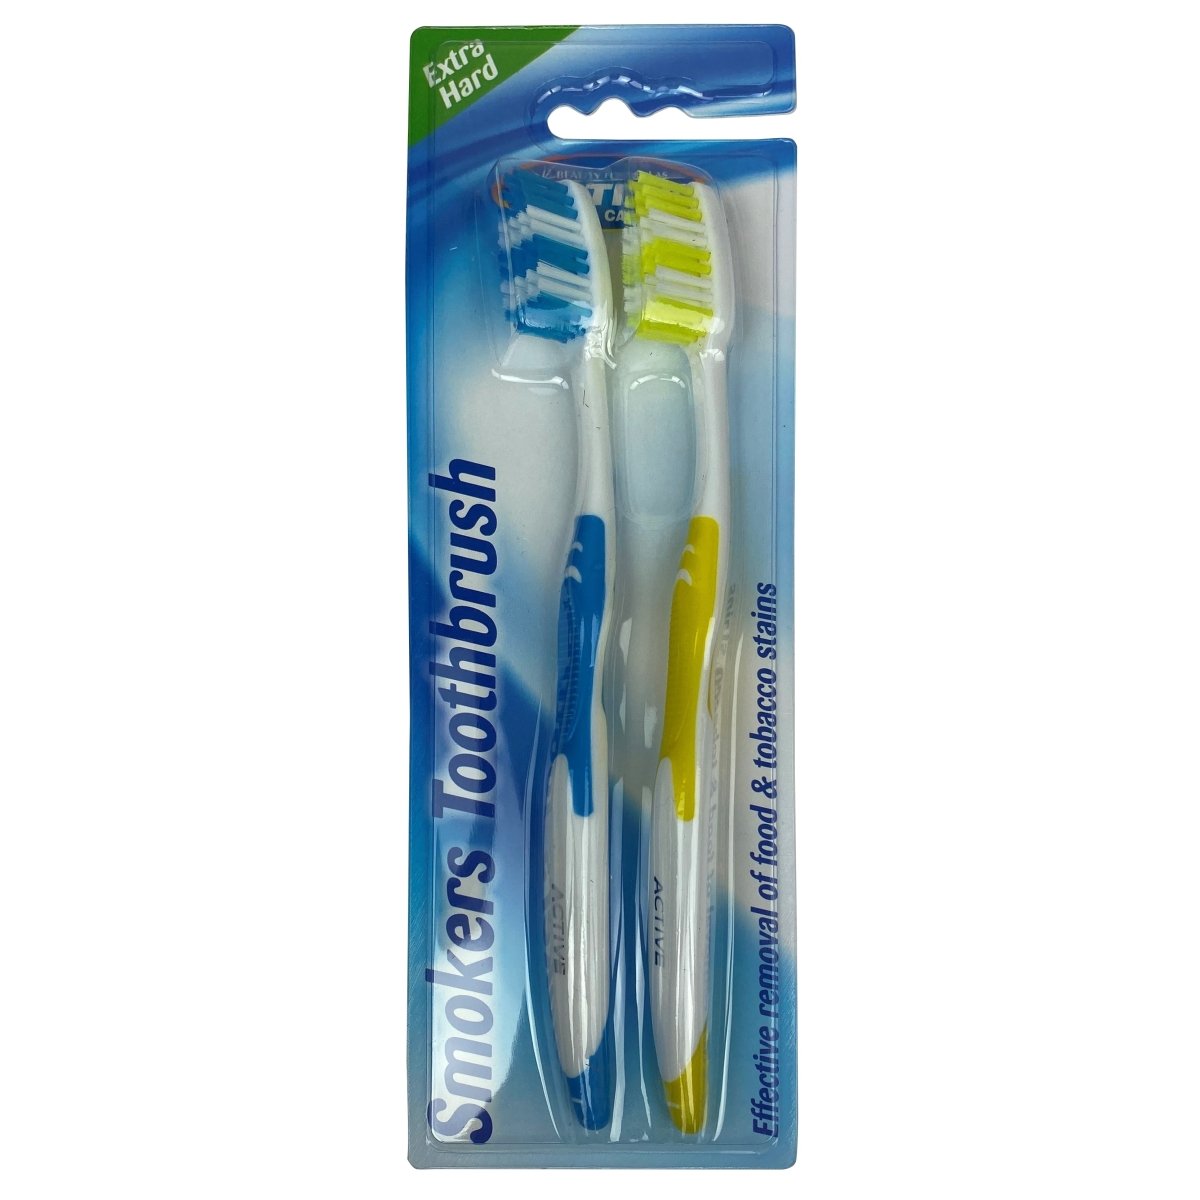 Beauty Formulas Smokers Toothbrush Extra Hard - Intamarque 5012251008815